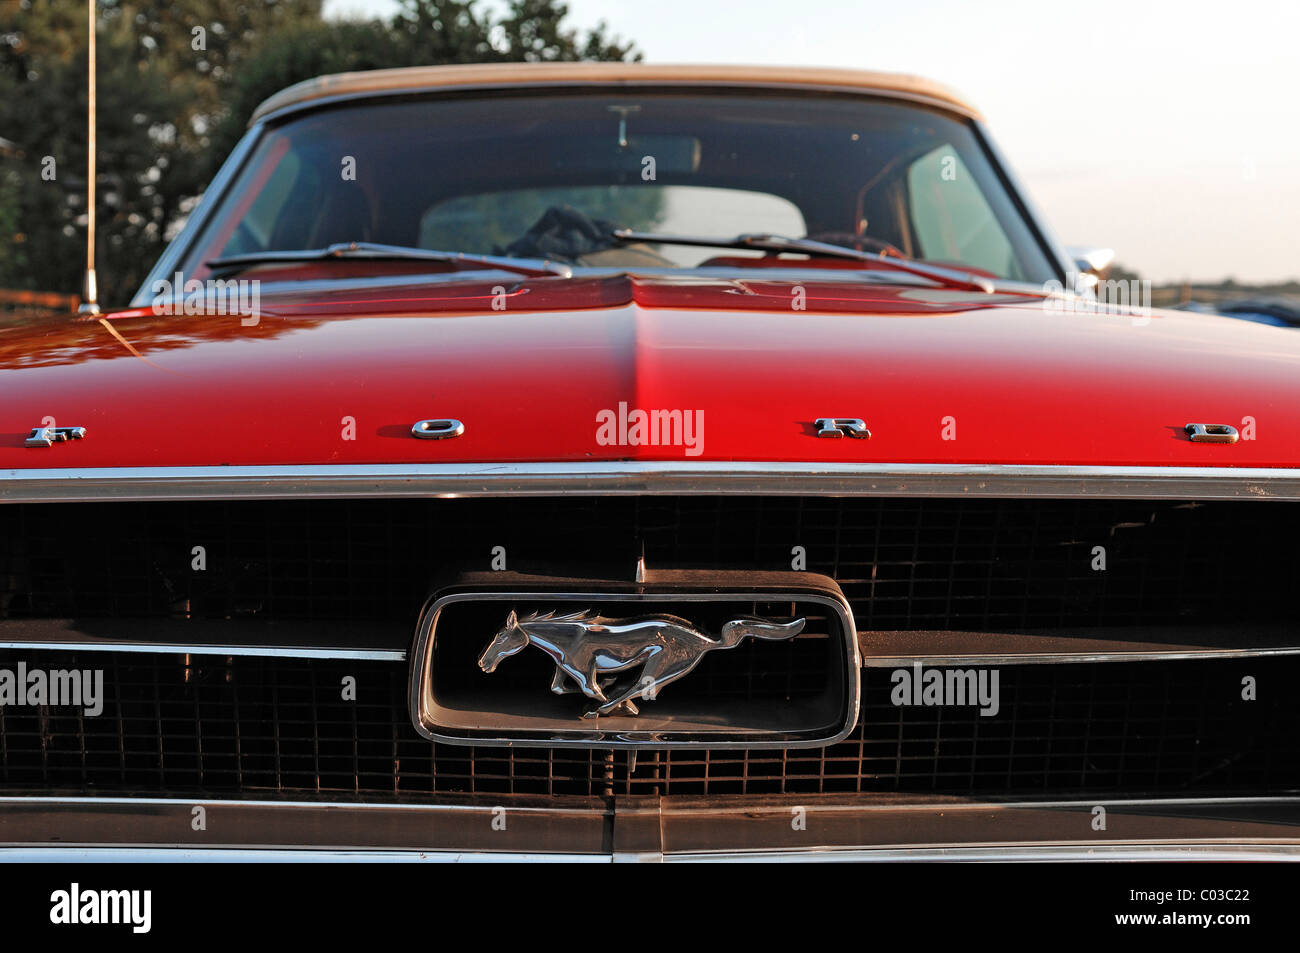 Detalle de un coche clásico, calandra y emblema de un Ford Mustang Convertible, construido en 1967, de 147 kW, 200 hp Foto de stock